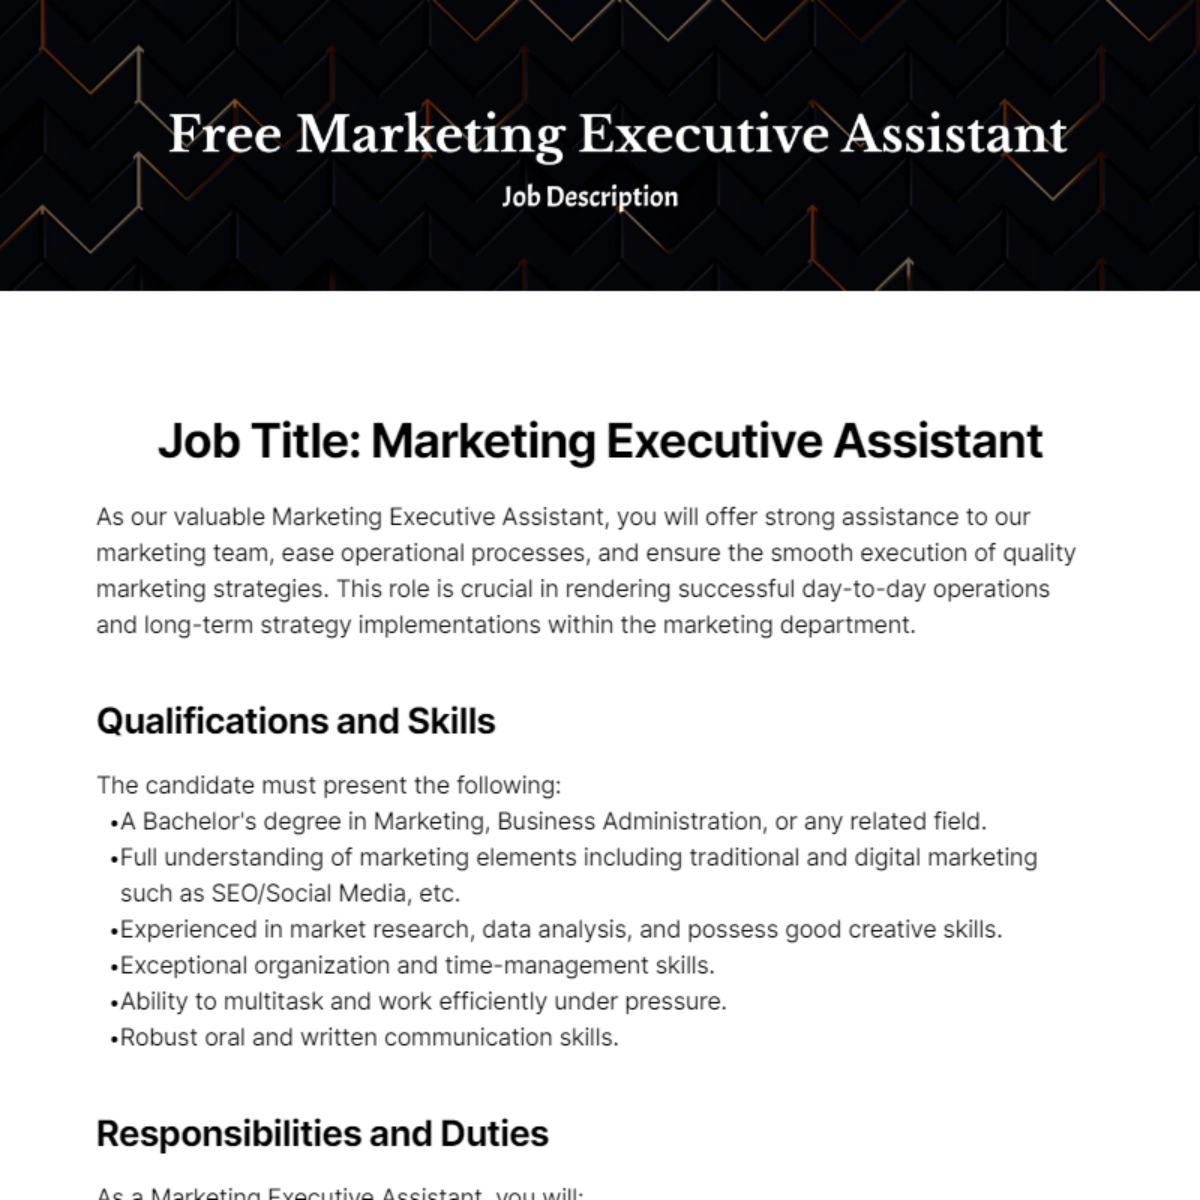 Free Marketing Executive Assistant Job Description Template